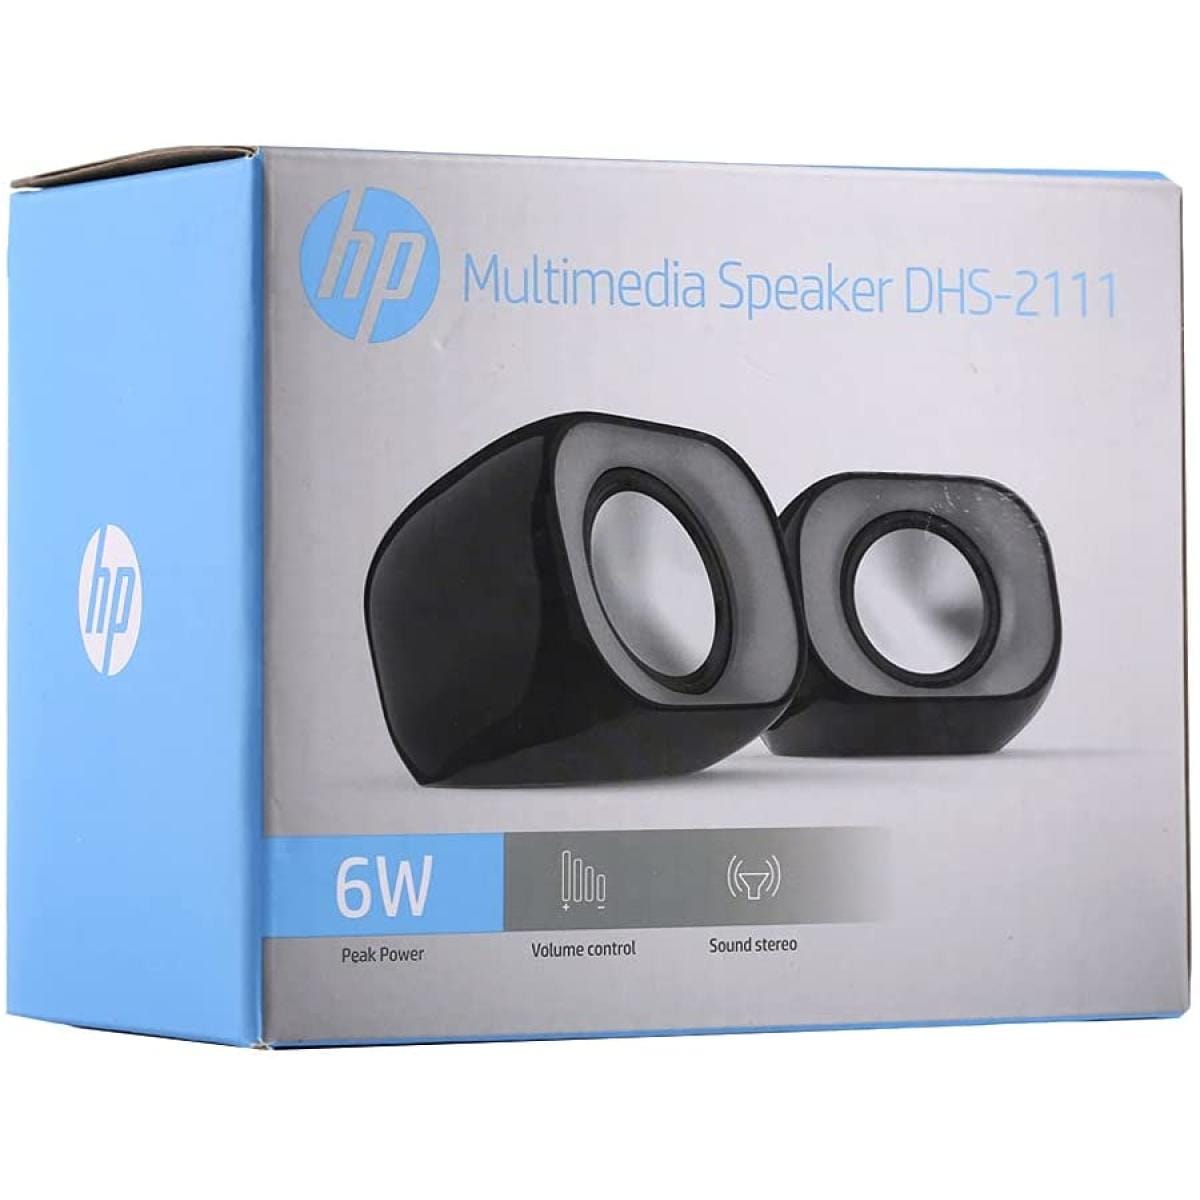 HP speaker HP DHS-2111 Multimedia Speaker